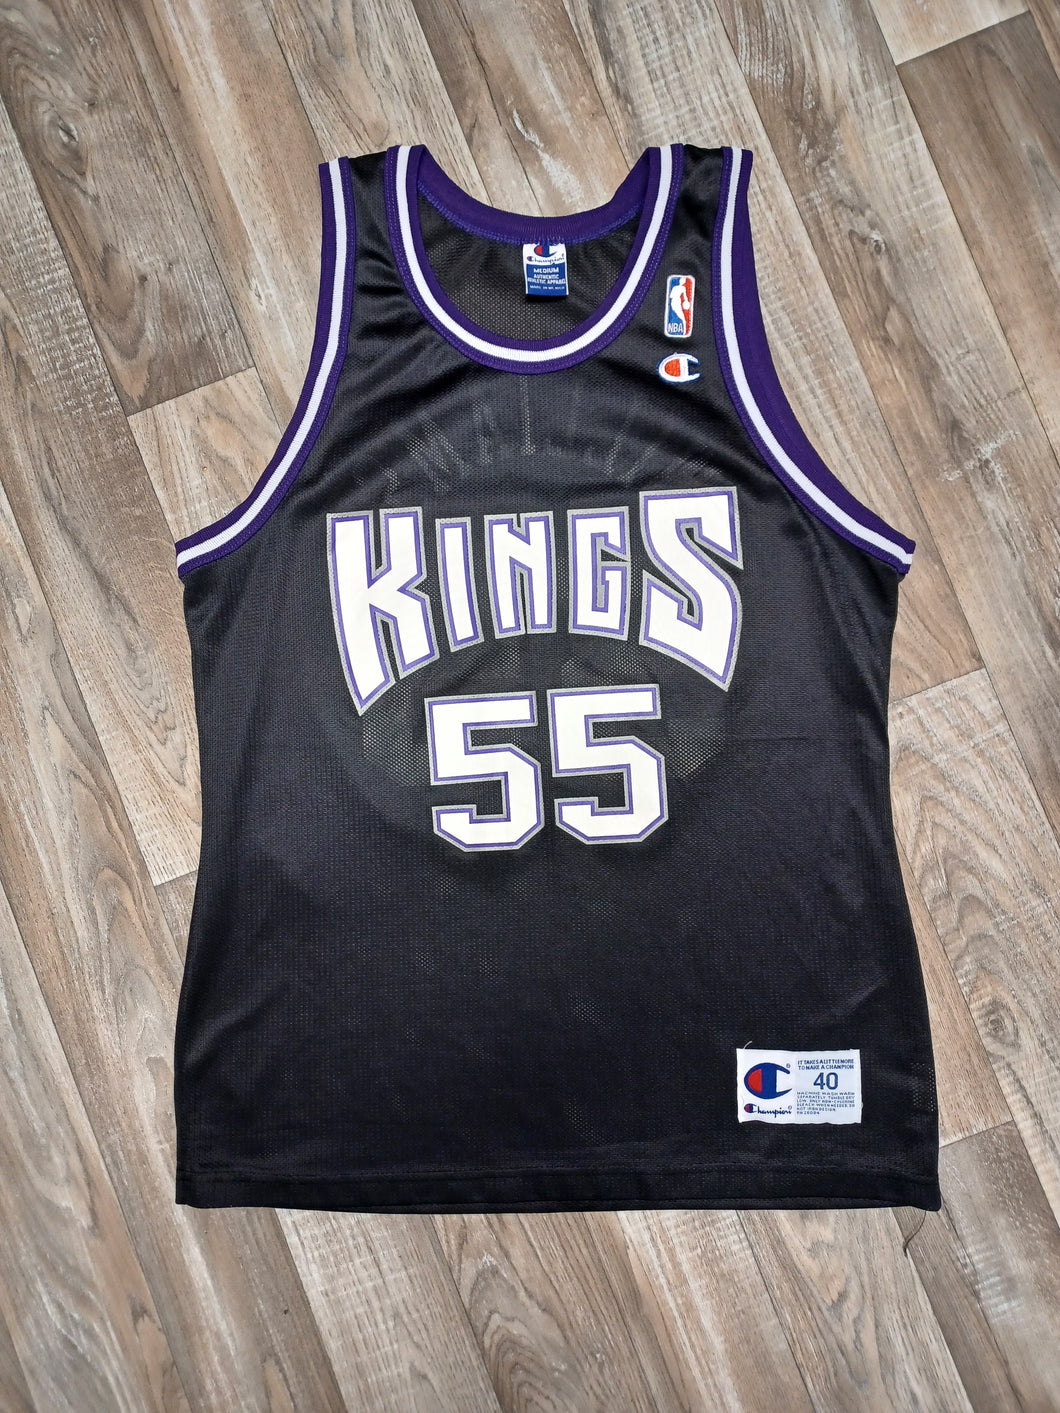 Jason Williams Sacramento Kings Jersey Size Medium